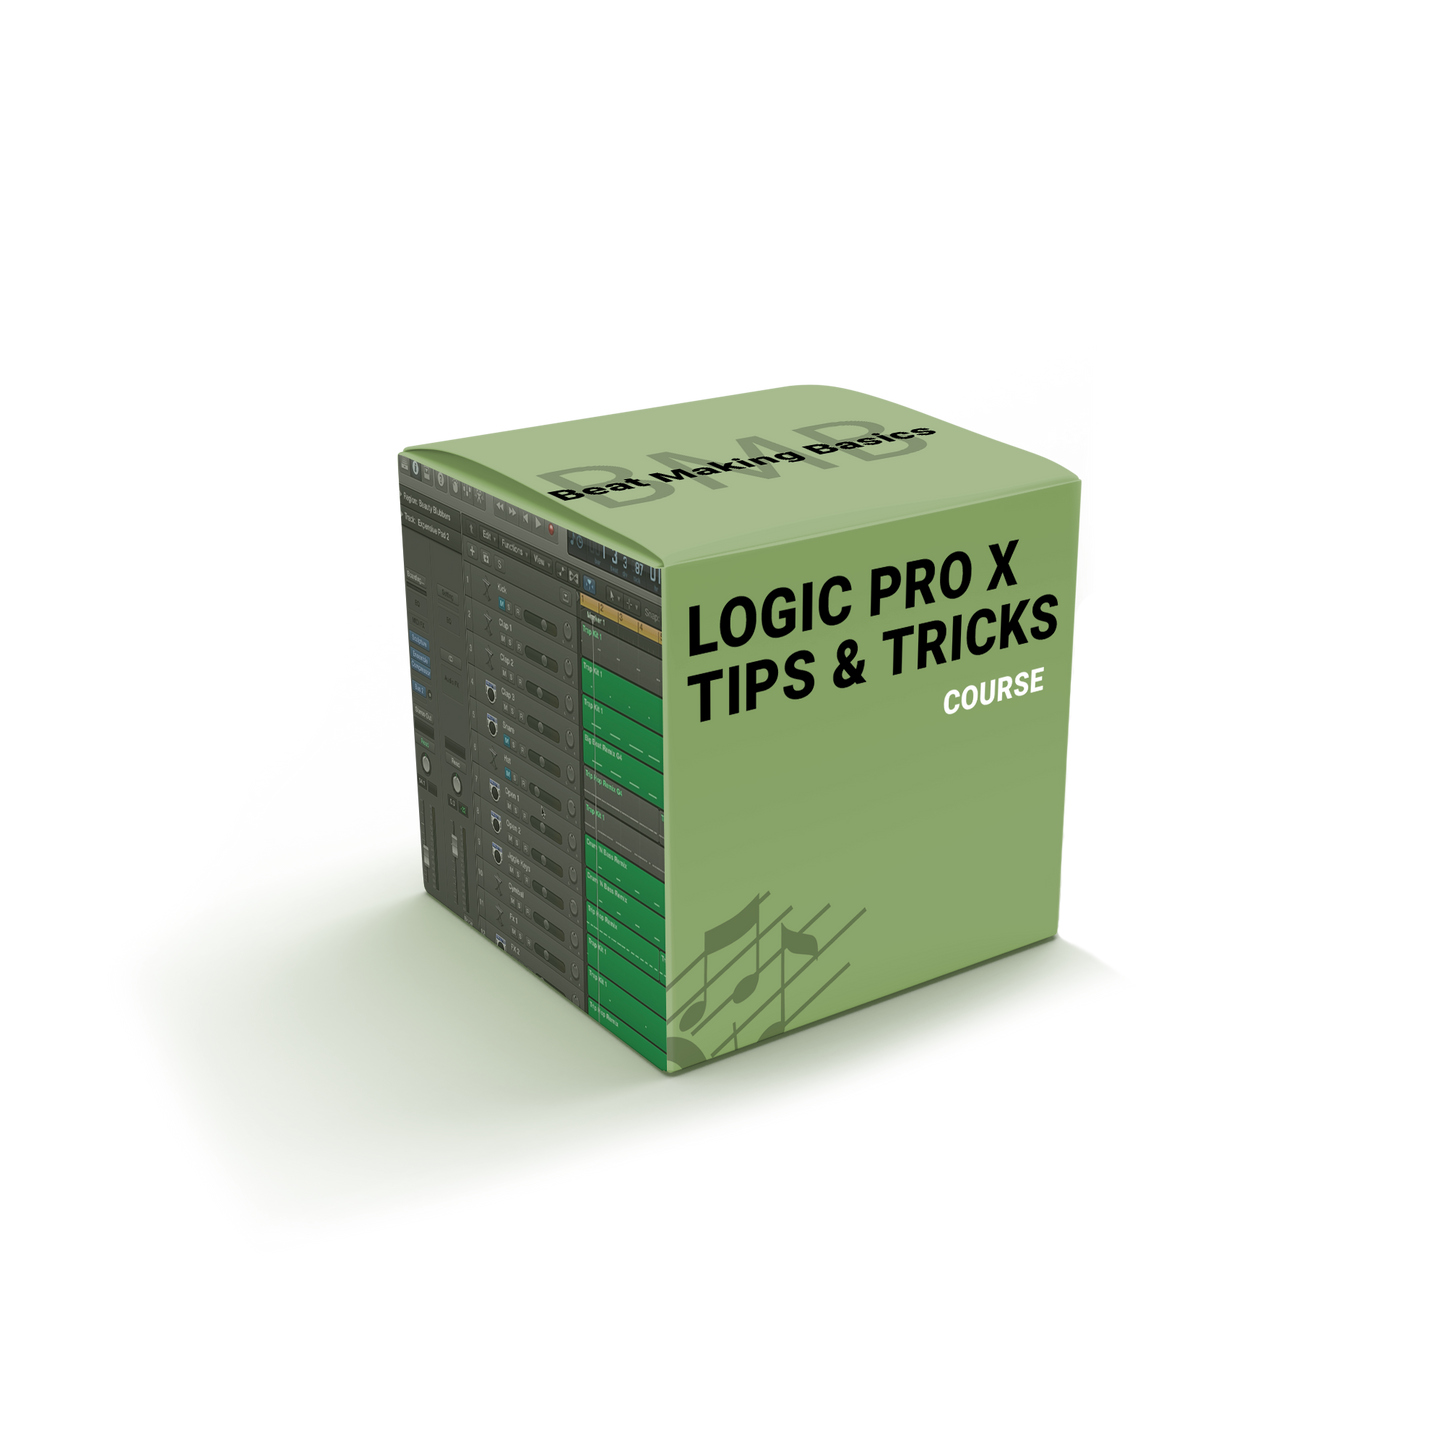 Logic Pro X Tips & Tricks